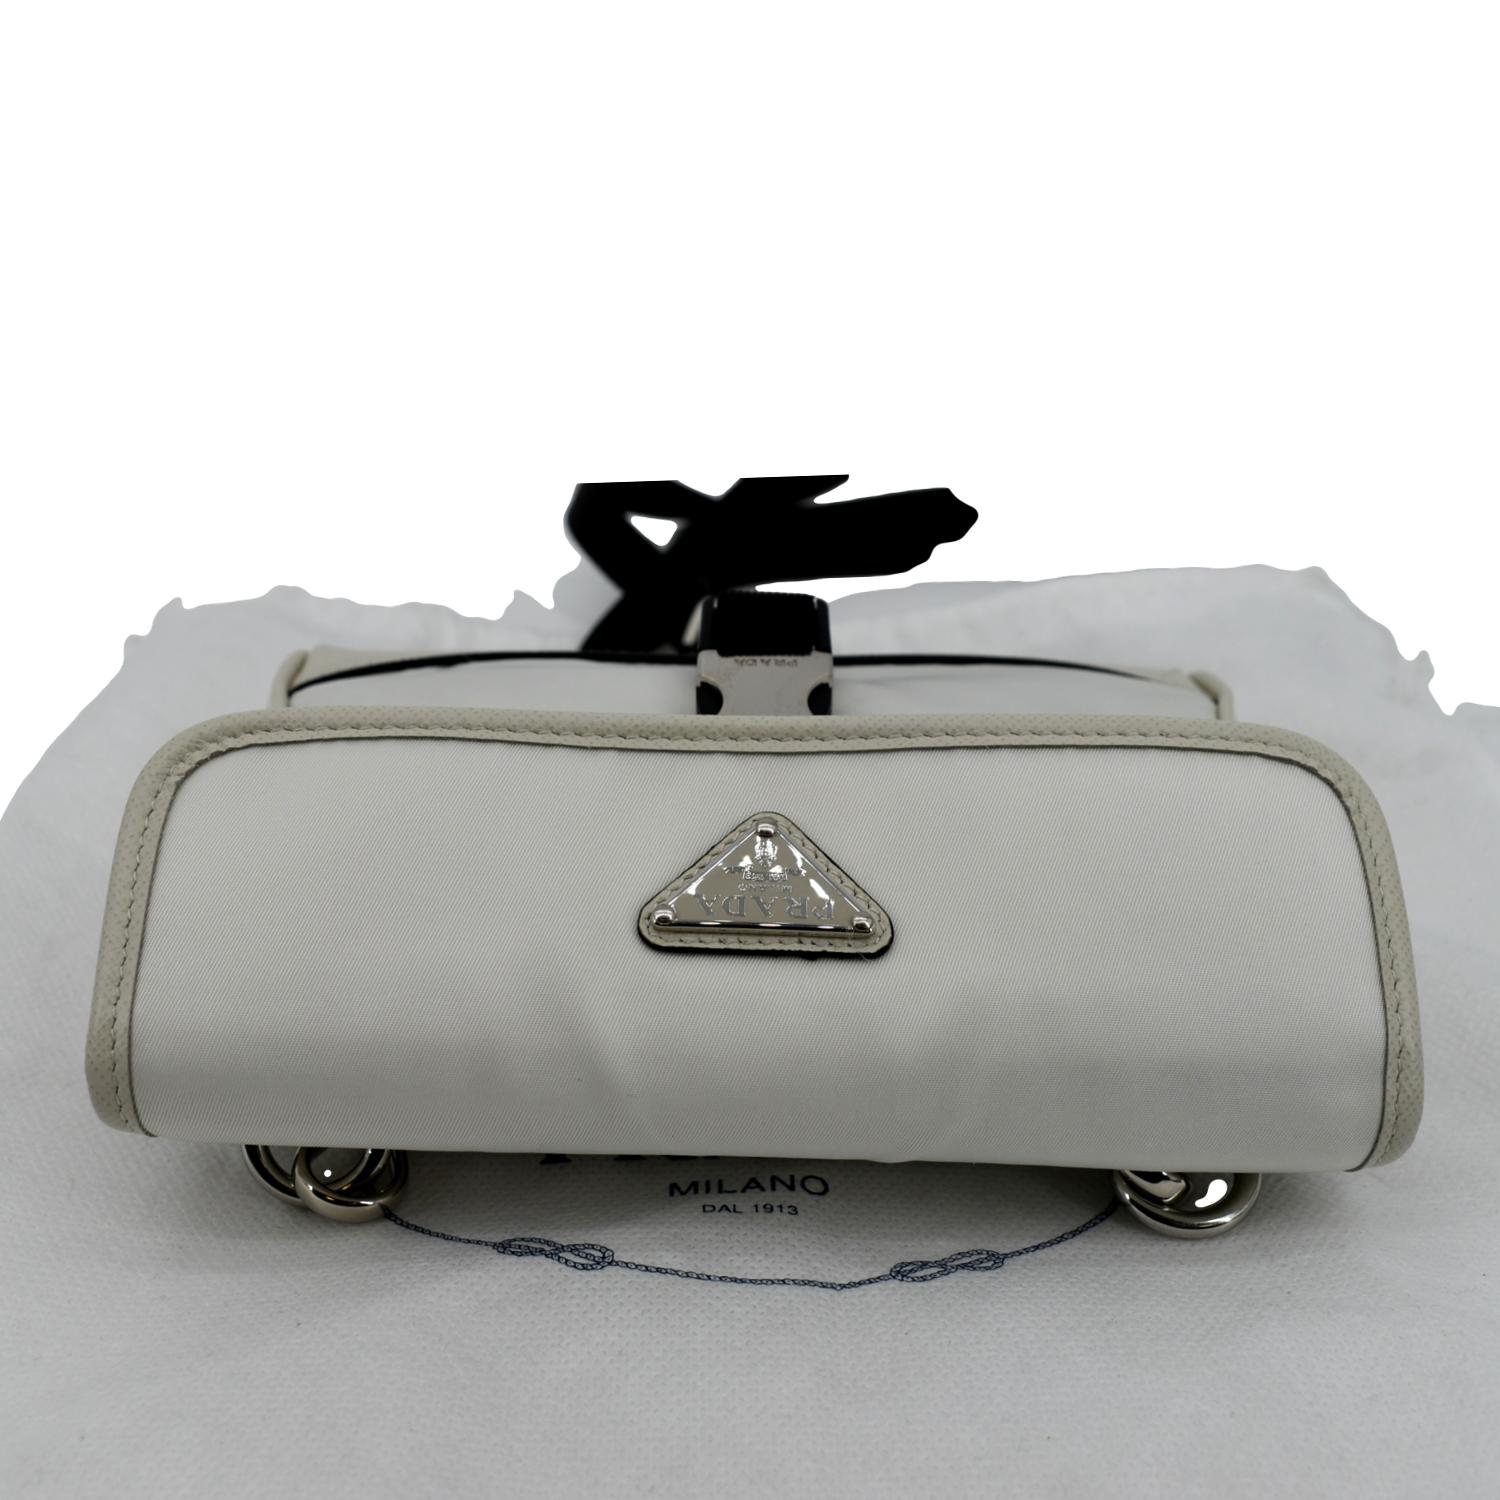 Prada Monochrome Flap Bags In White Saffiano Leather On Sale